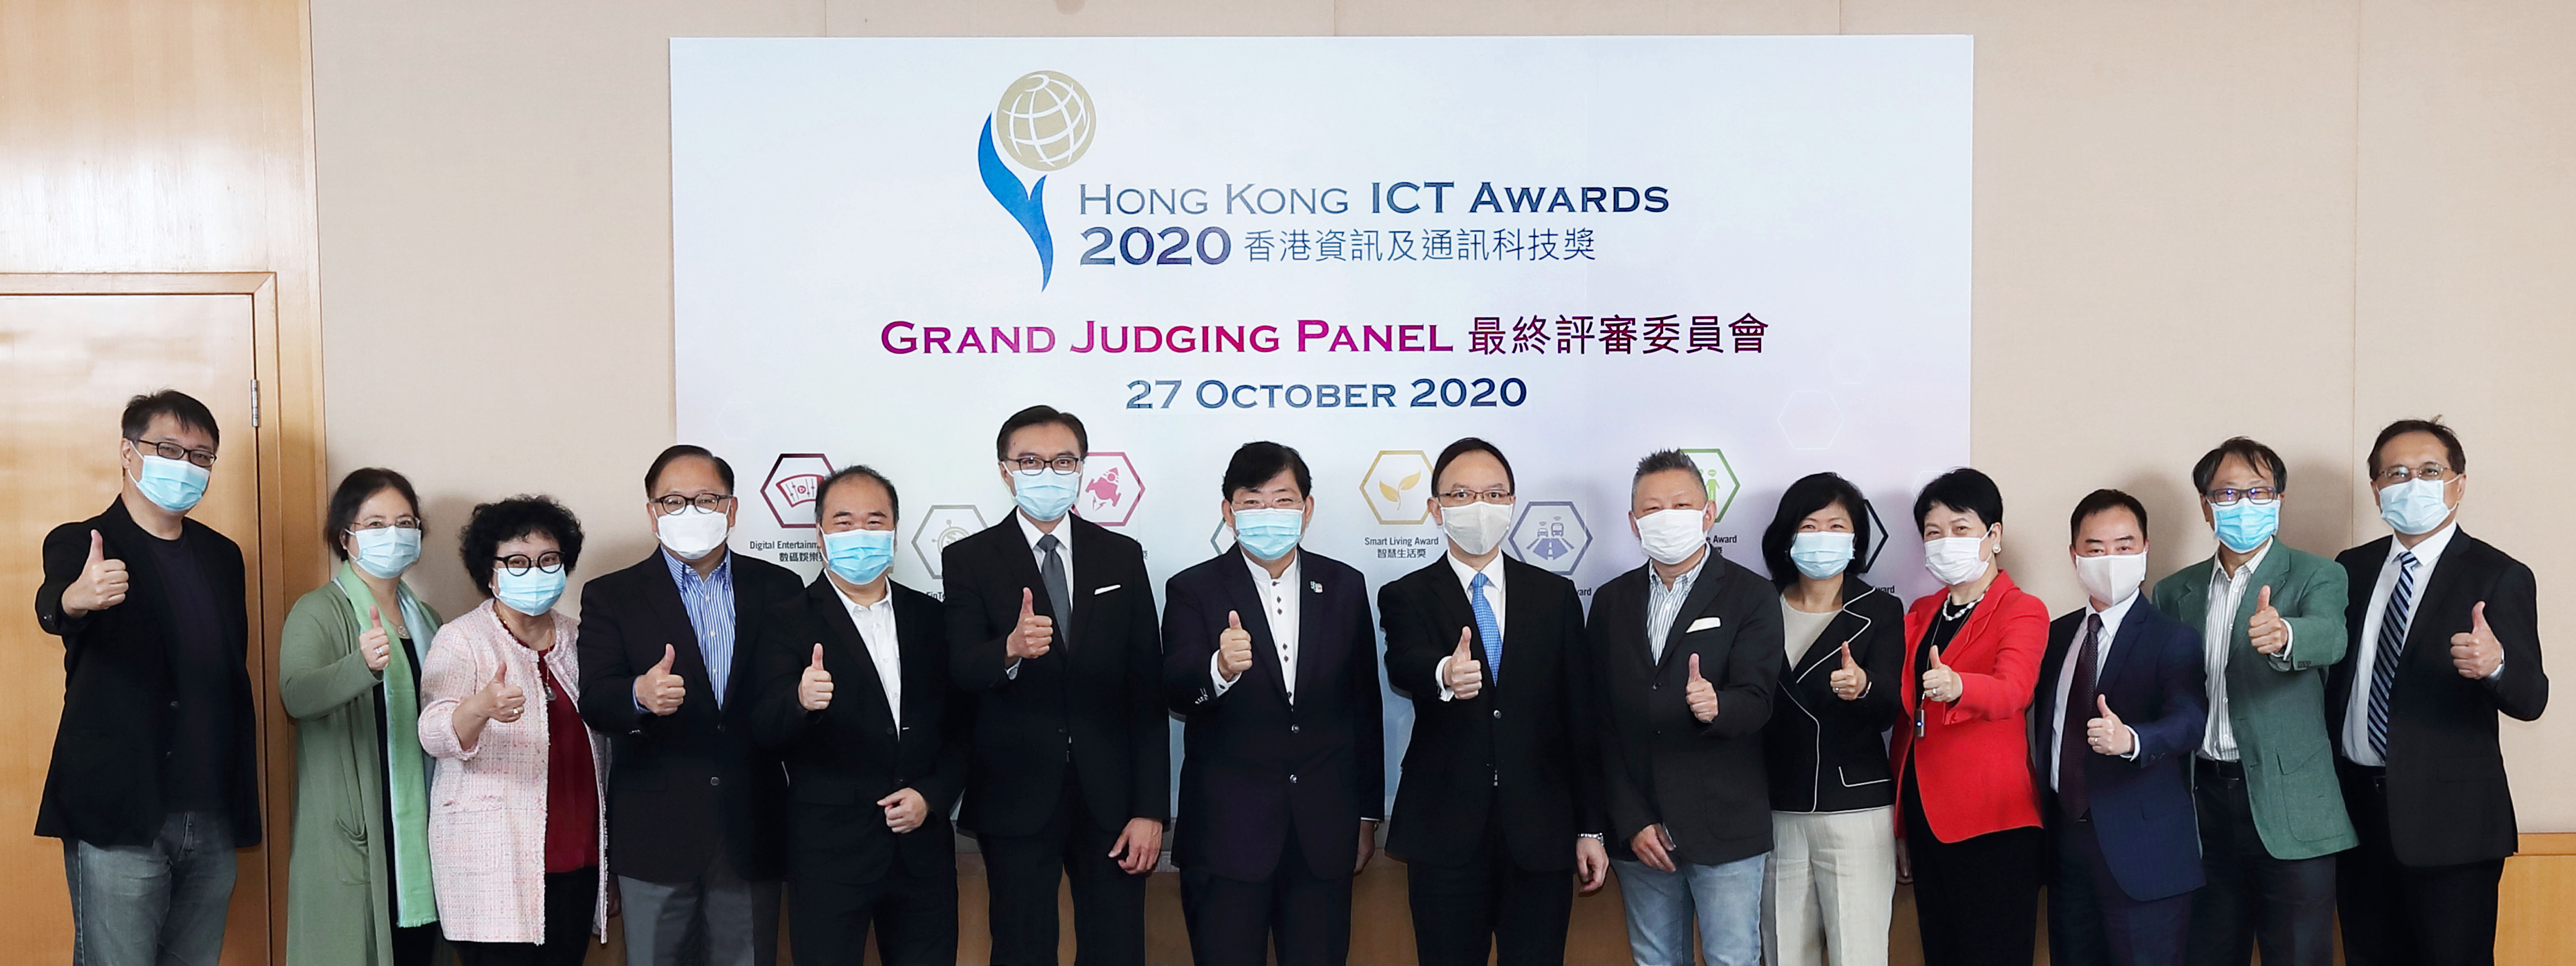 Hong Kong ICT Awards 2020 Awards Presentation Ceremony